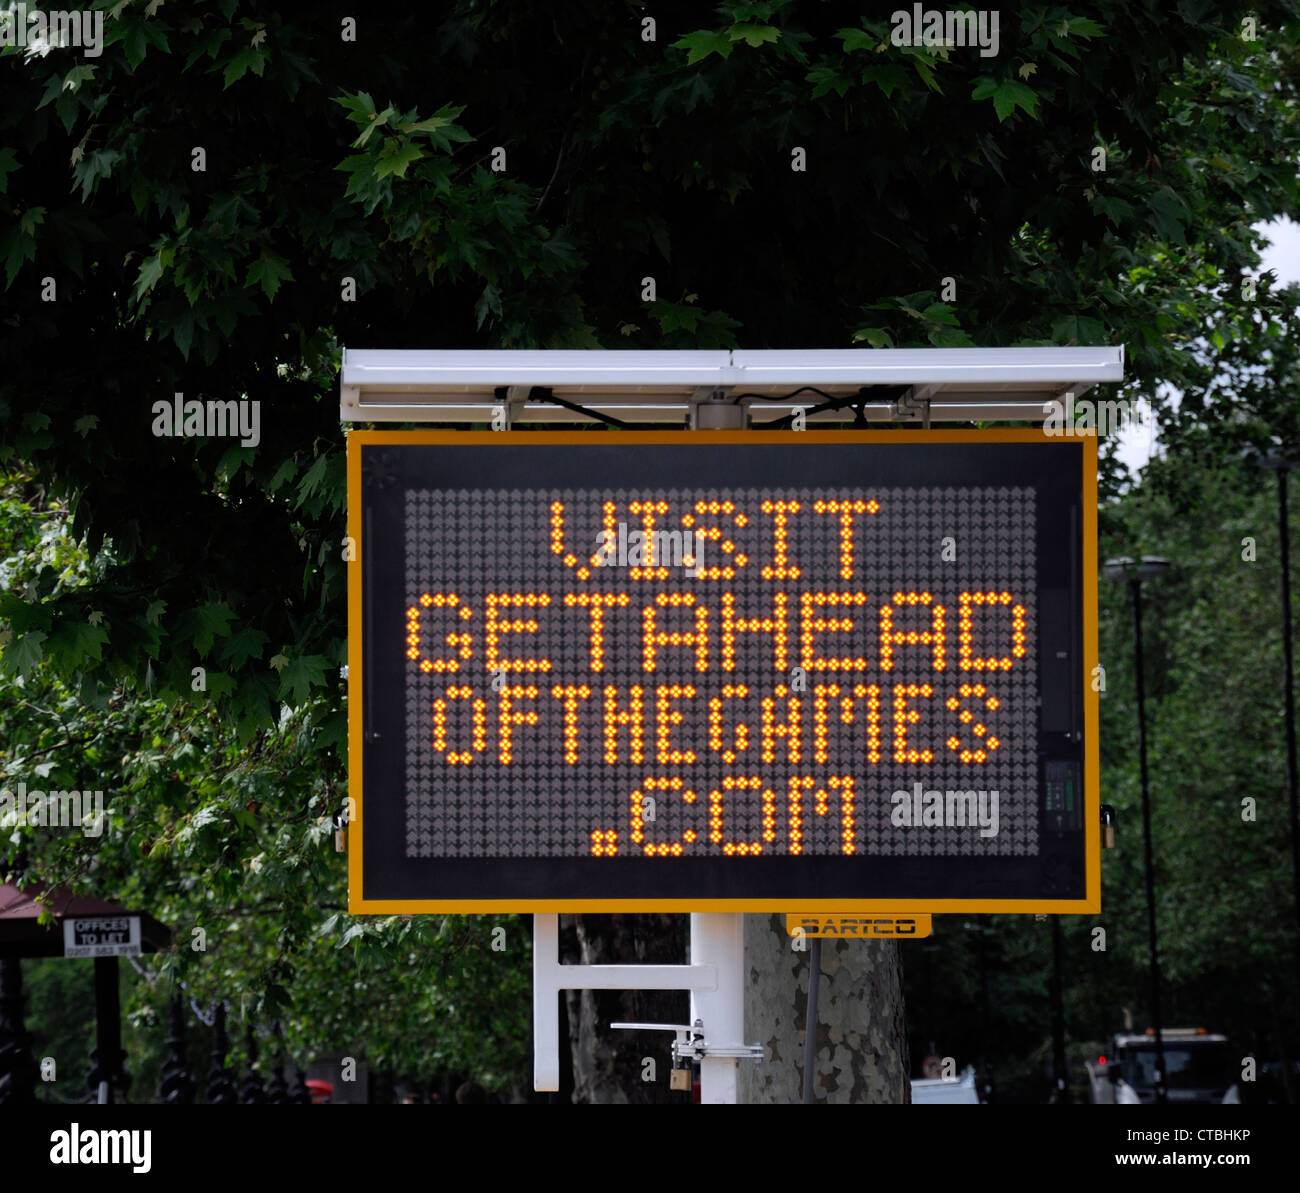 Traffic for London TFL LED road sign indicate indicating traffic